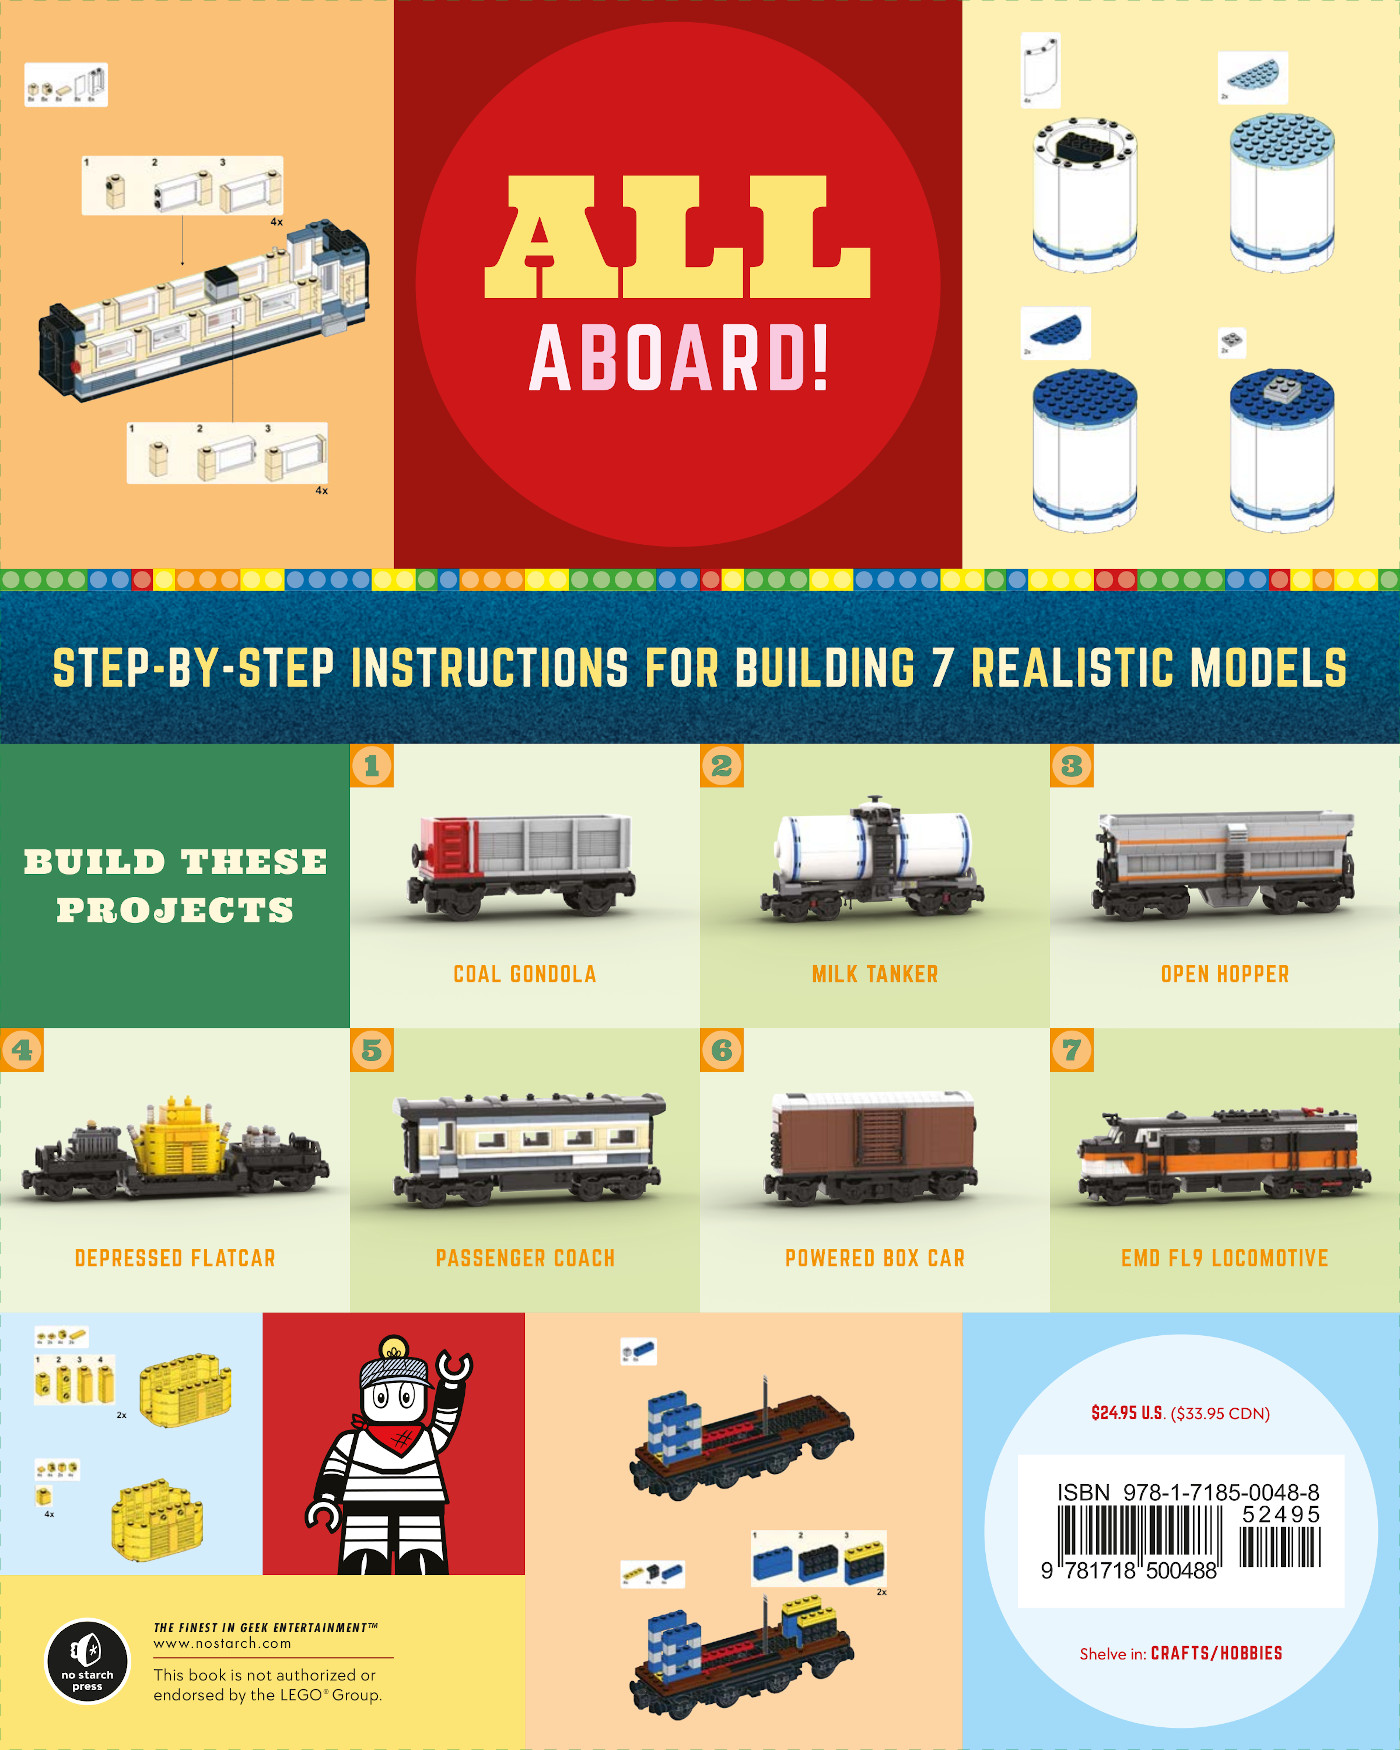 Lego Train Project back